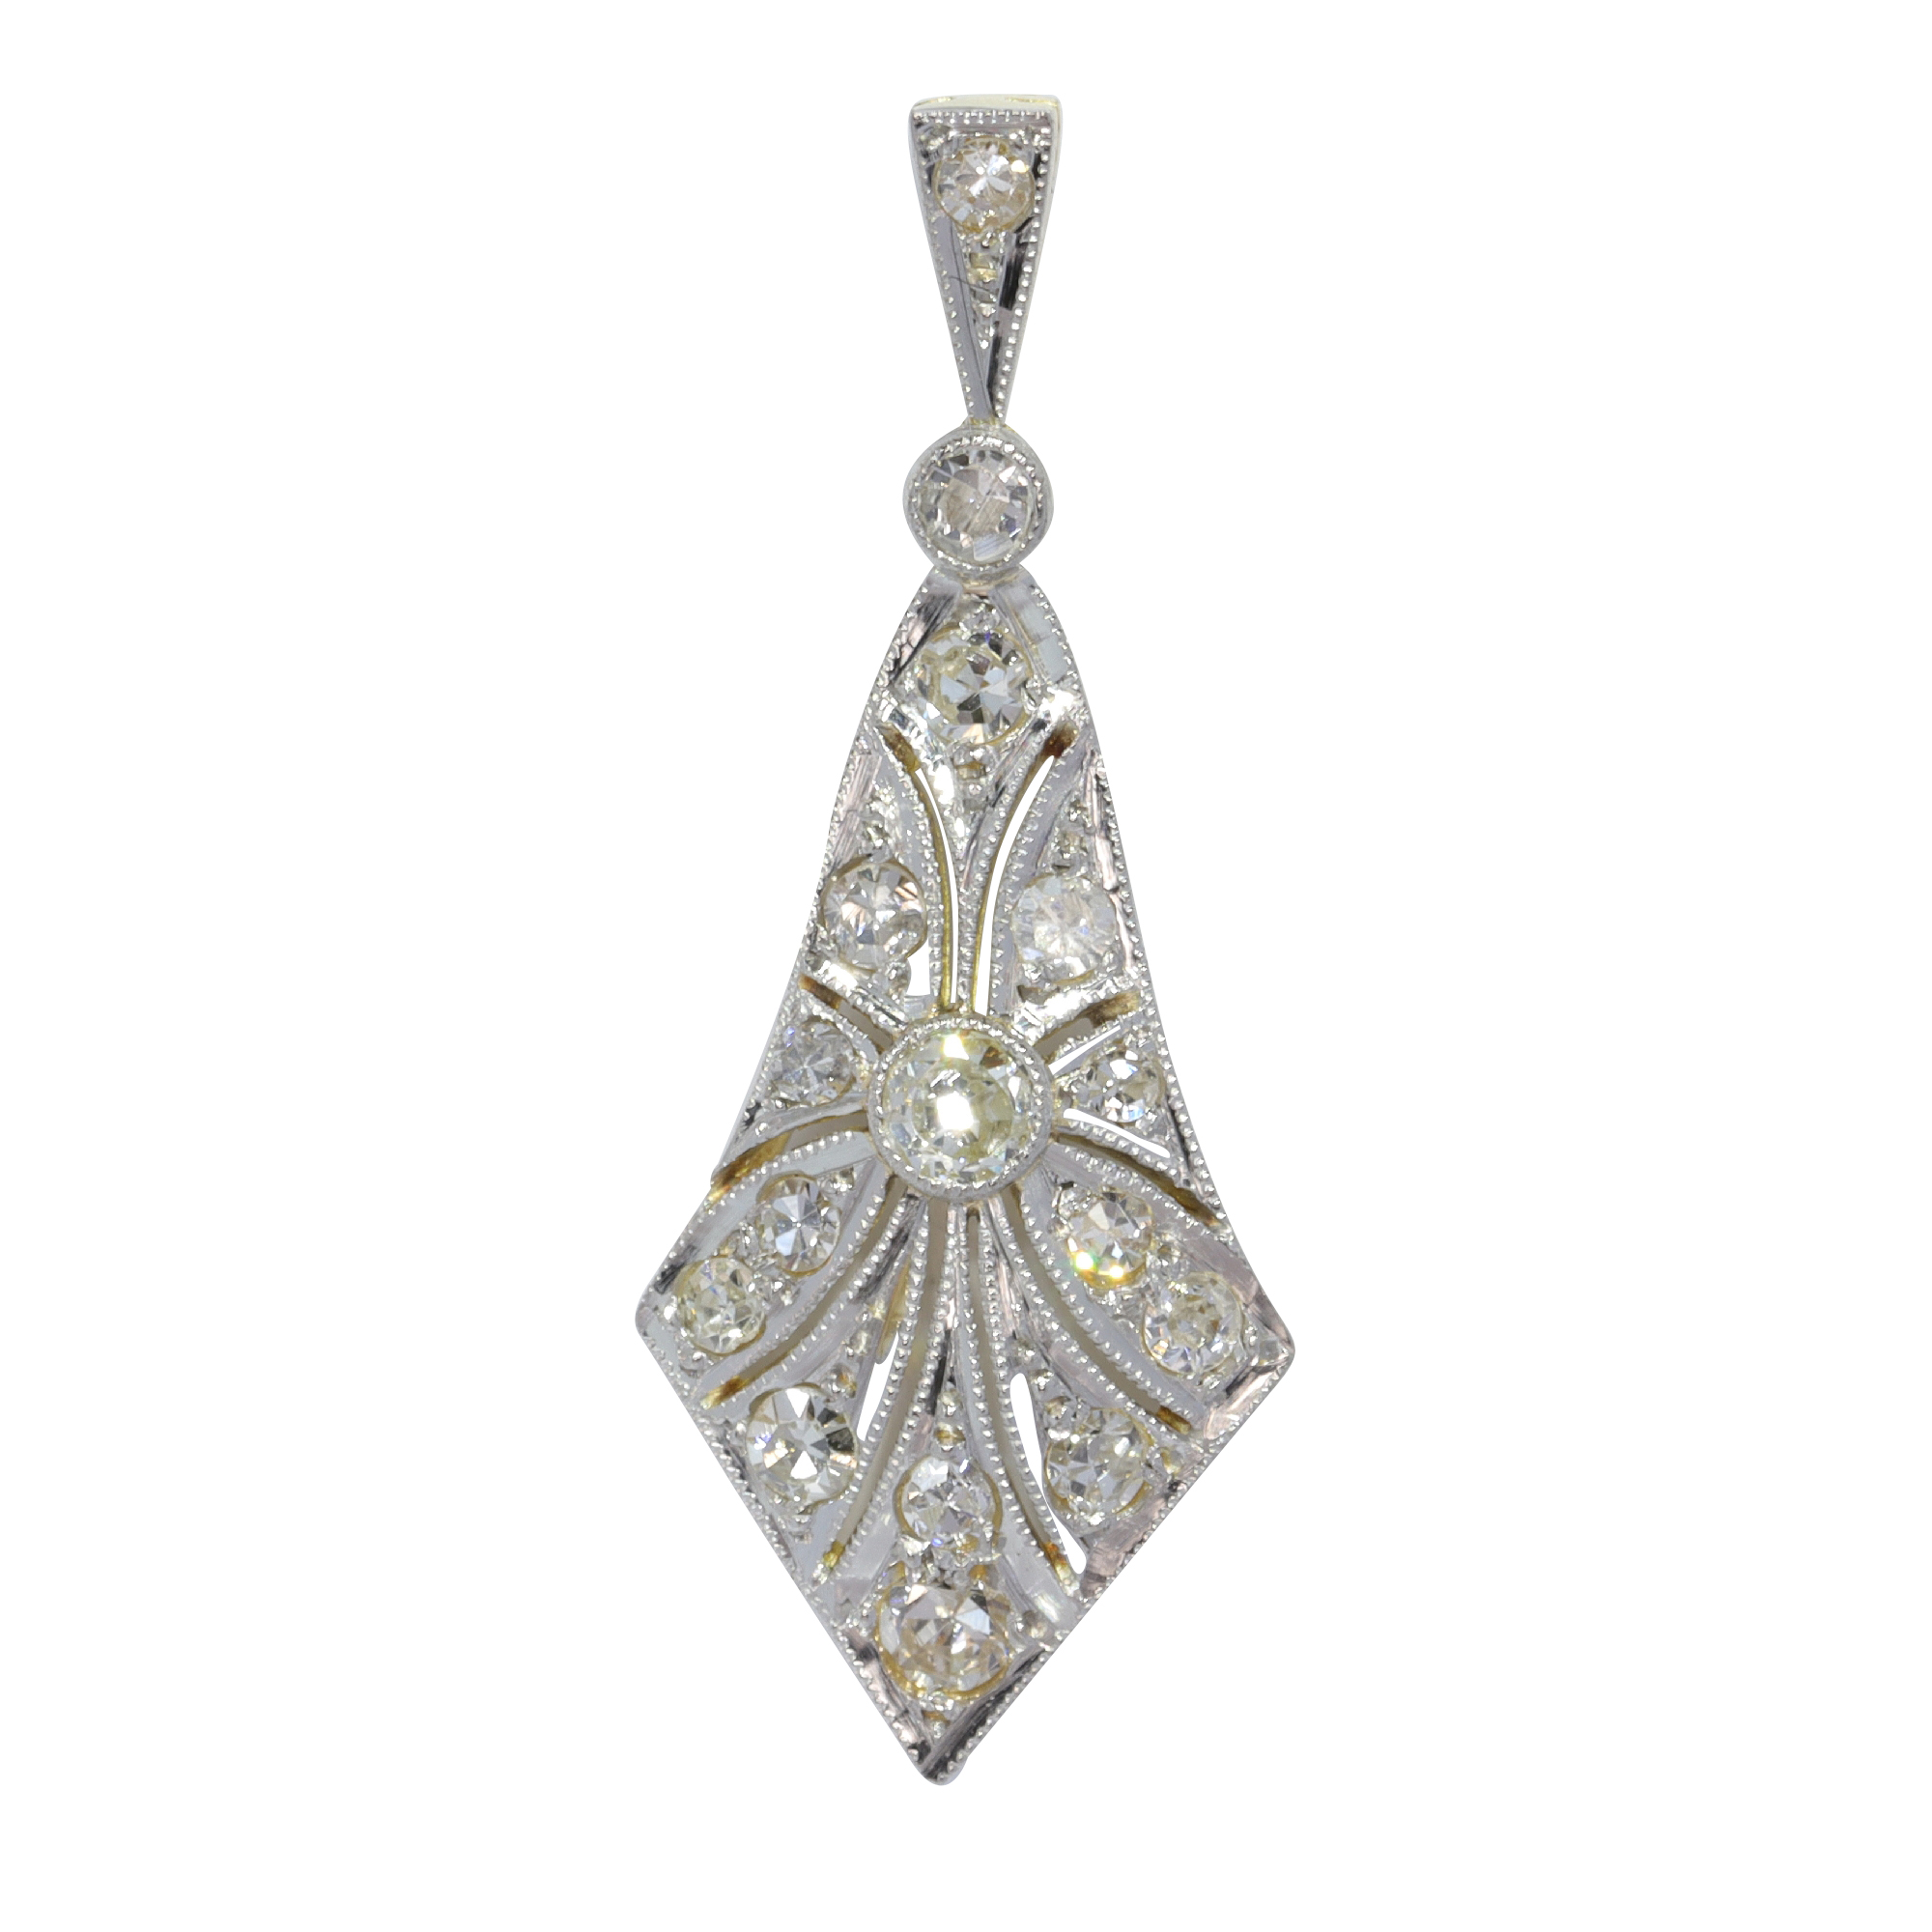 Vintage 1920's Art Deco diamond pendant